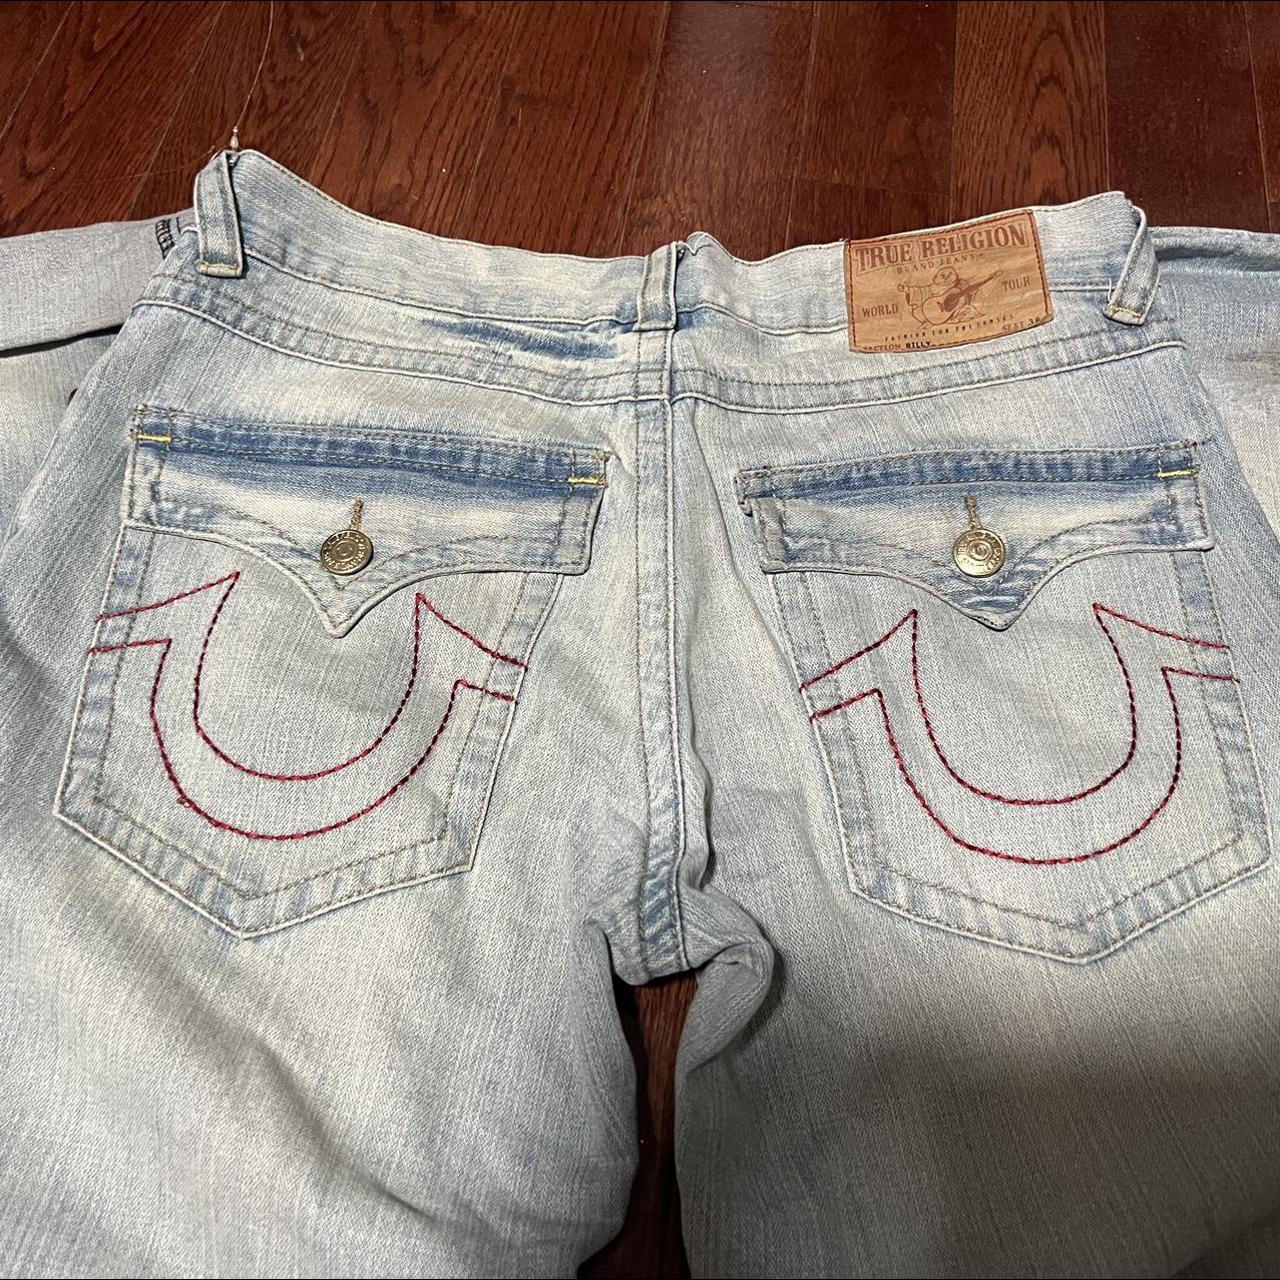 True religion jeans - Depop